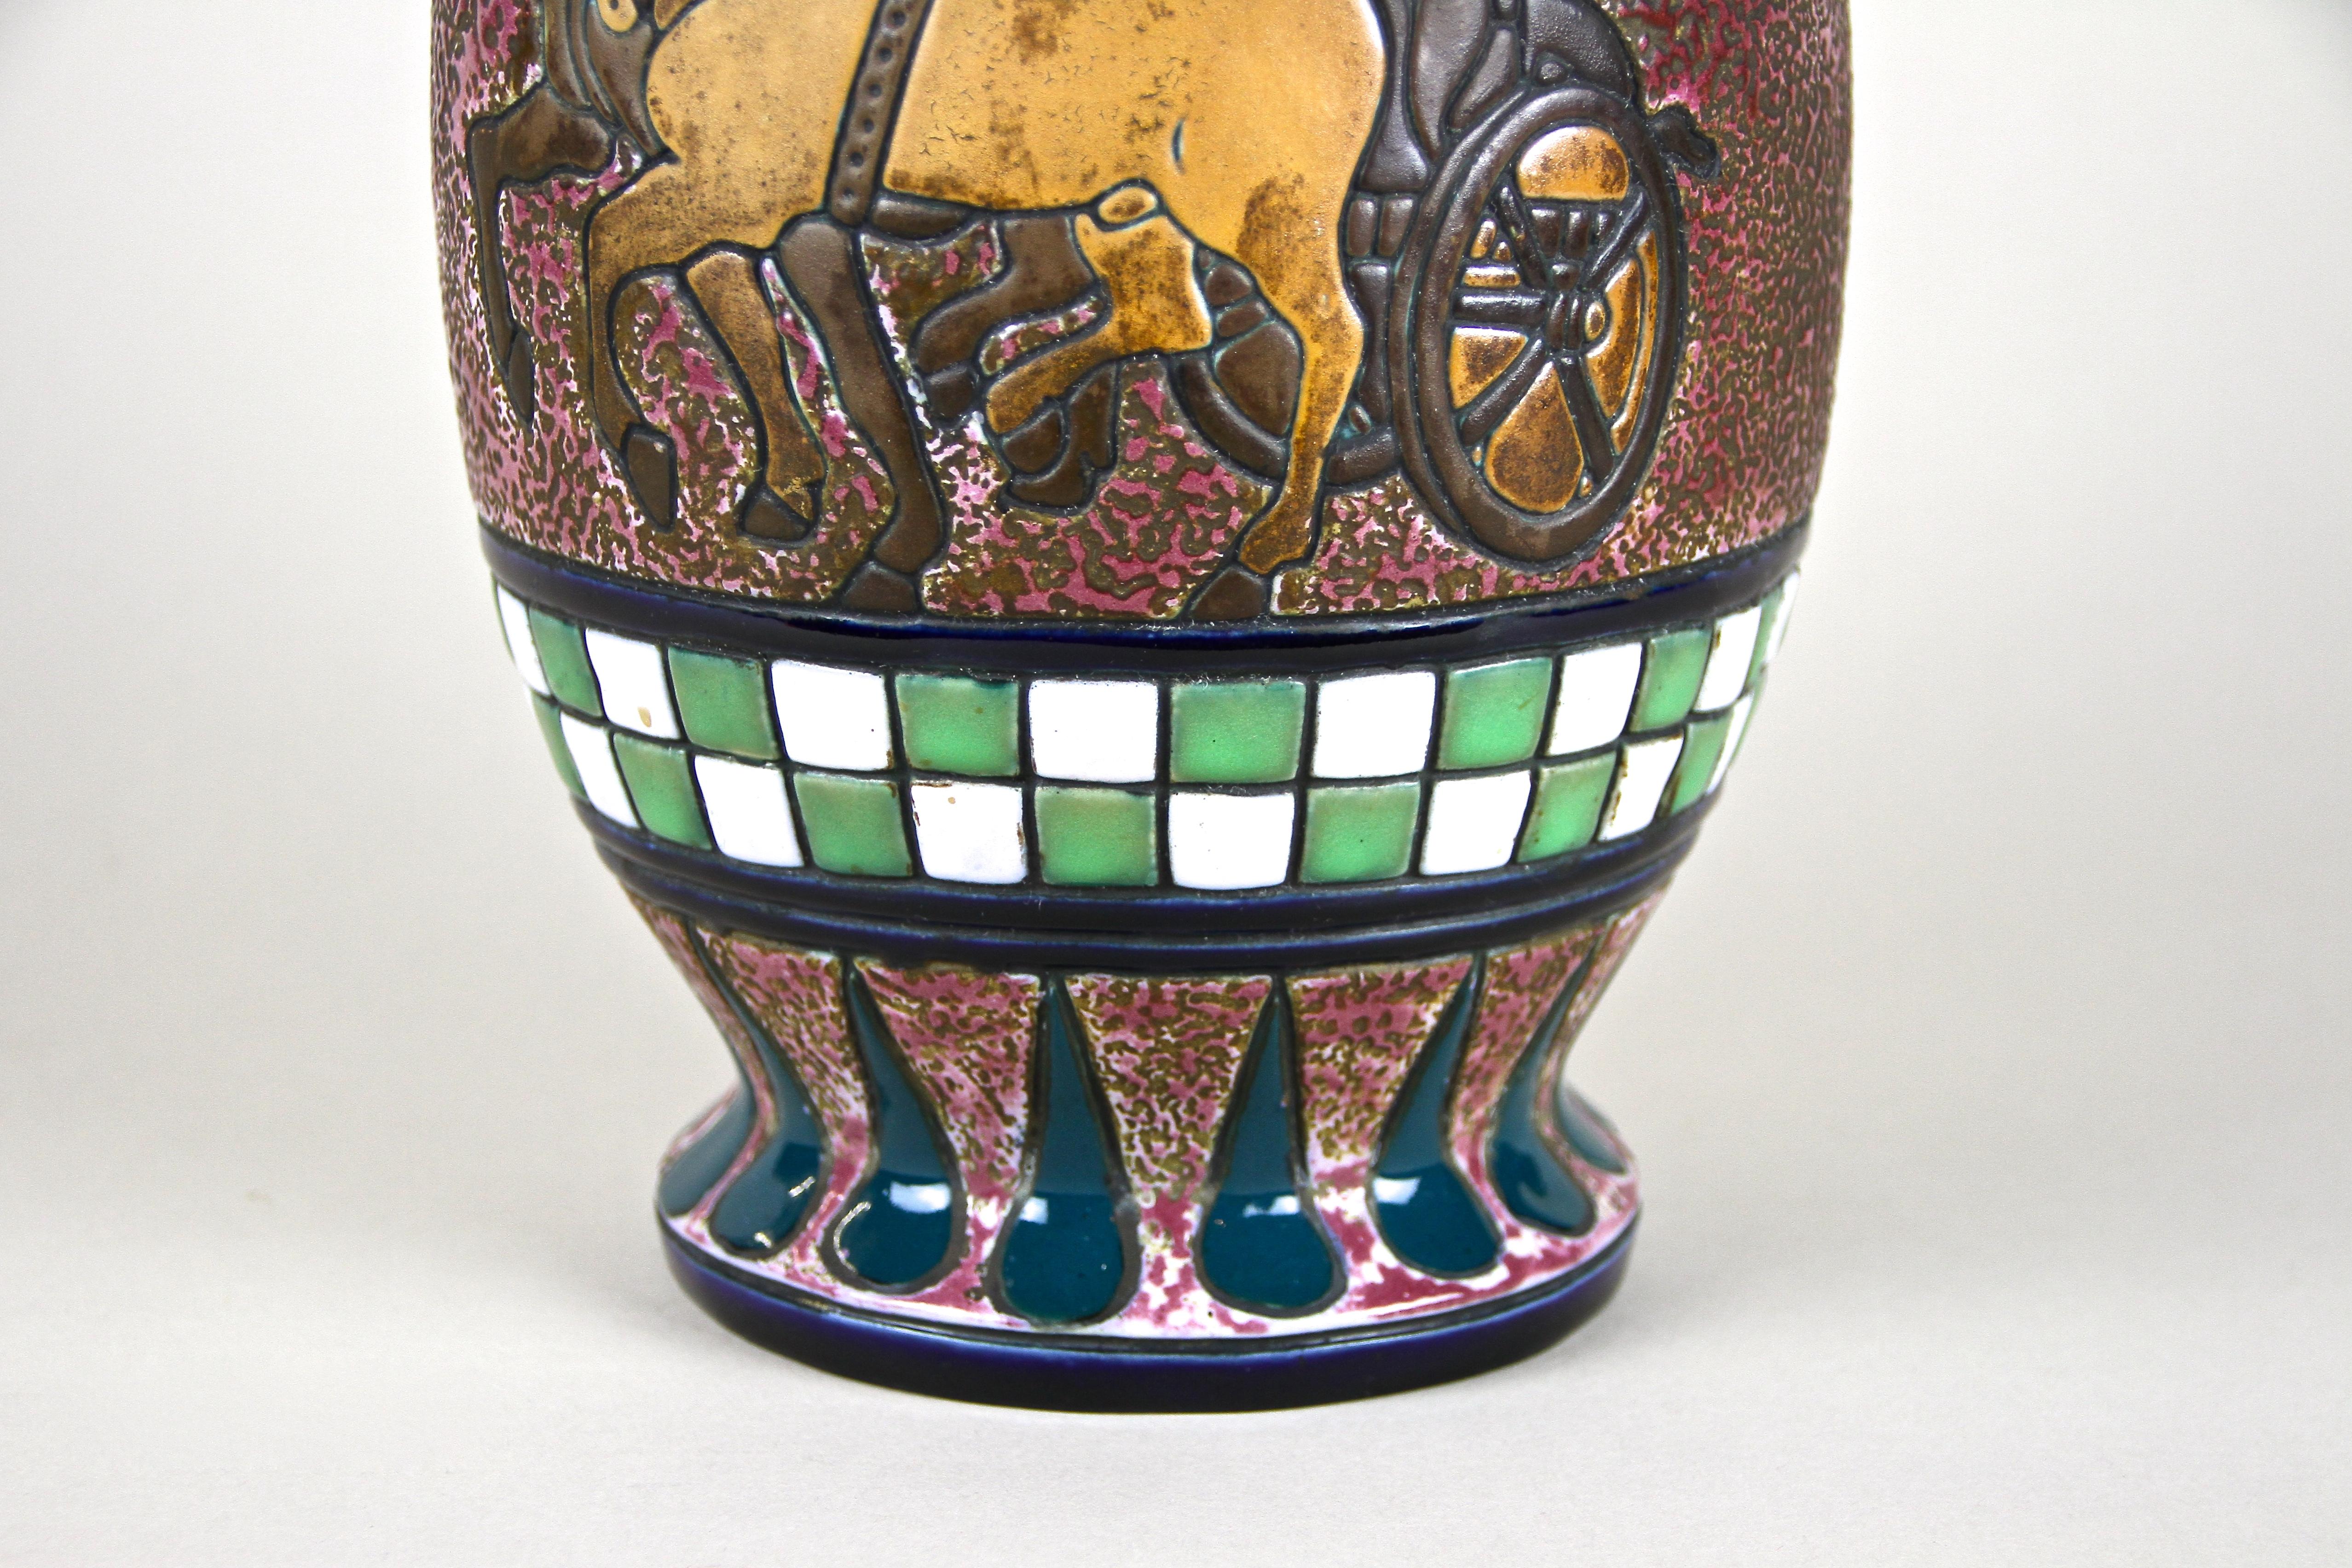 Czech Majolica Amphora Vase Enamel Painted by Amphora CZ, Art Deco Period, circa 1920